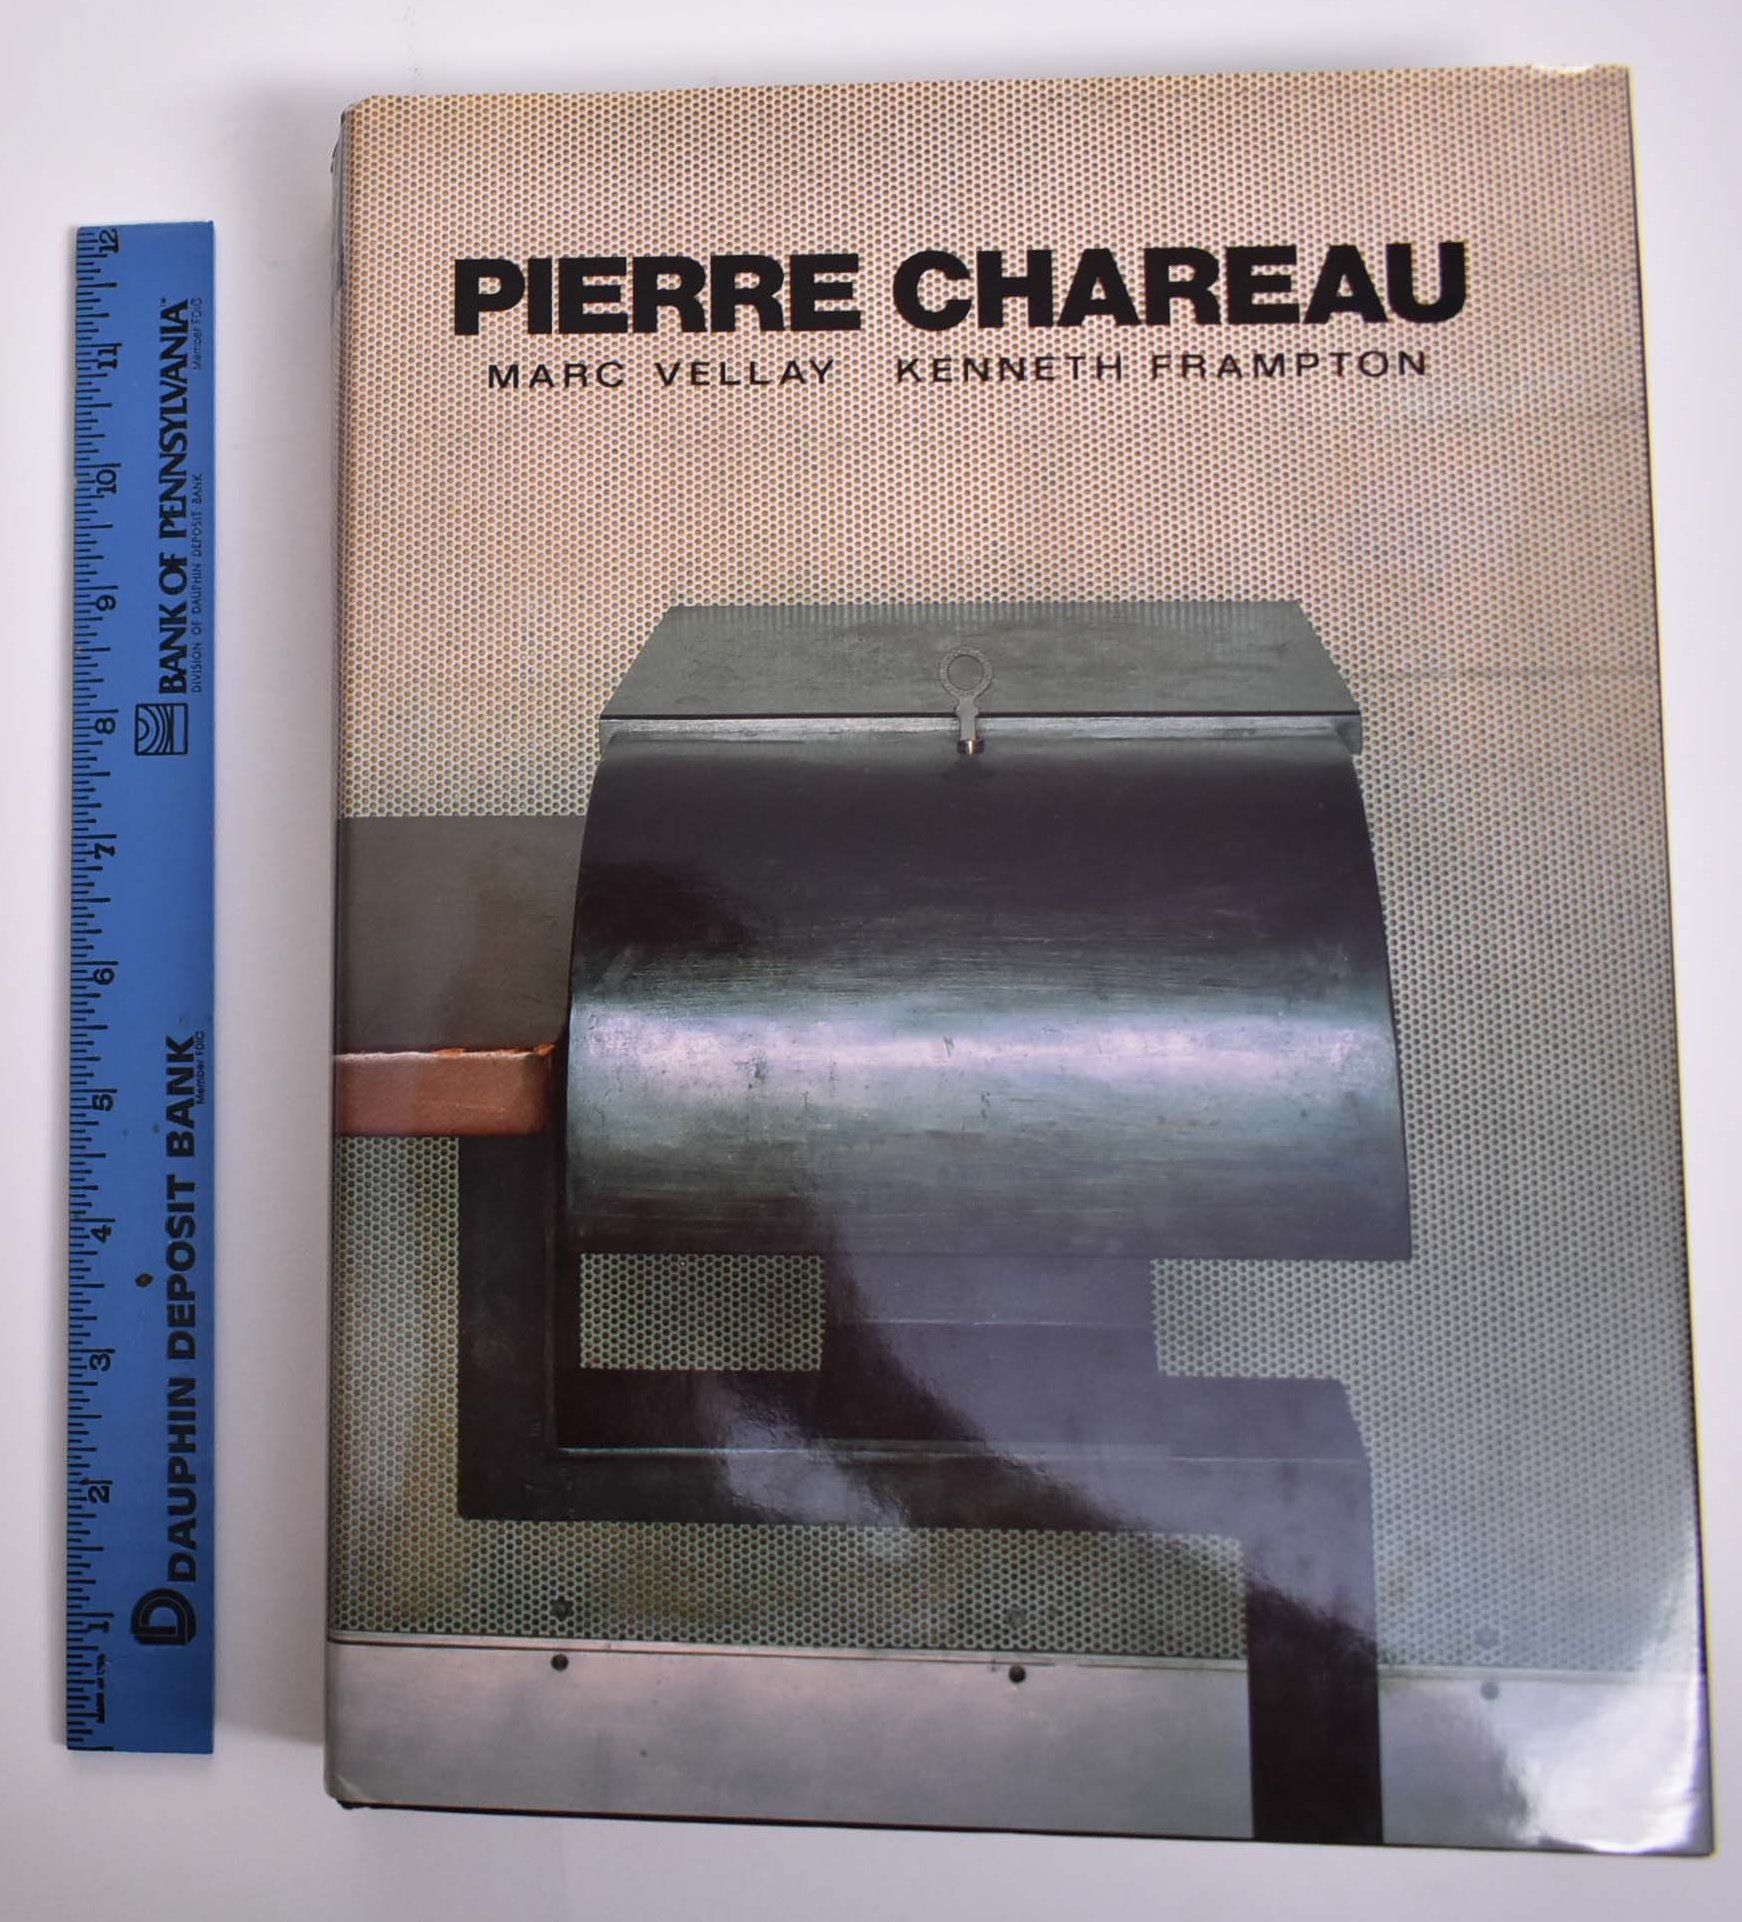 Pierre Chareau: Architecte-meublier, 1883 - 1950 - Vellay, Marc and Kenneth Frampton